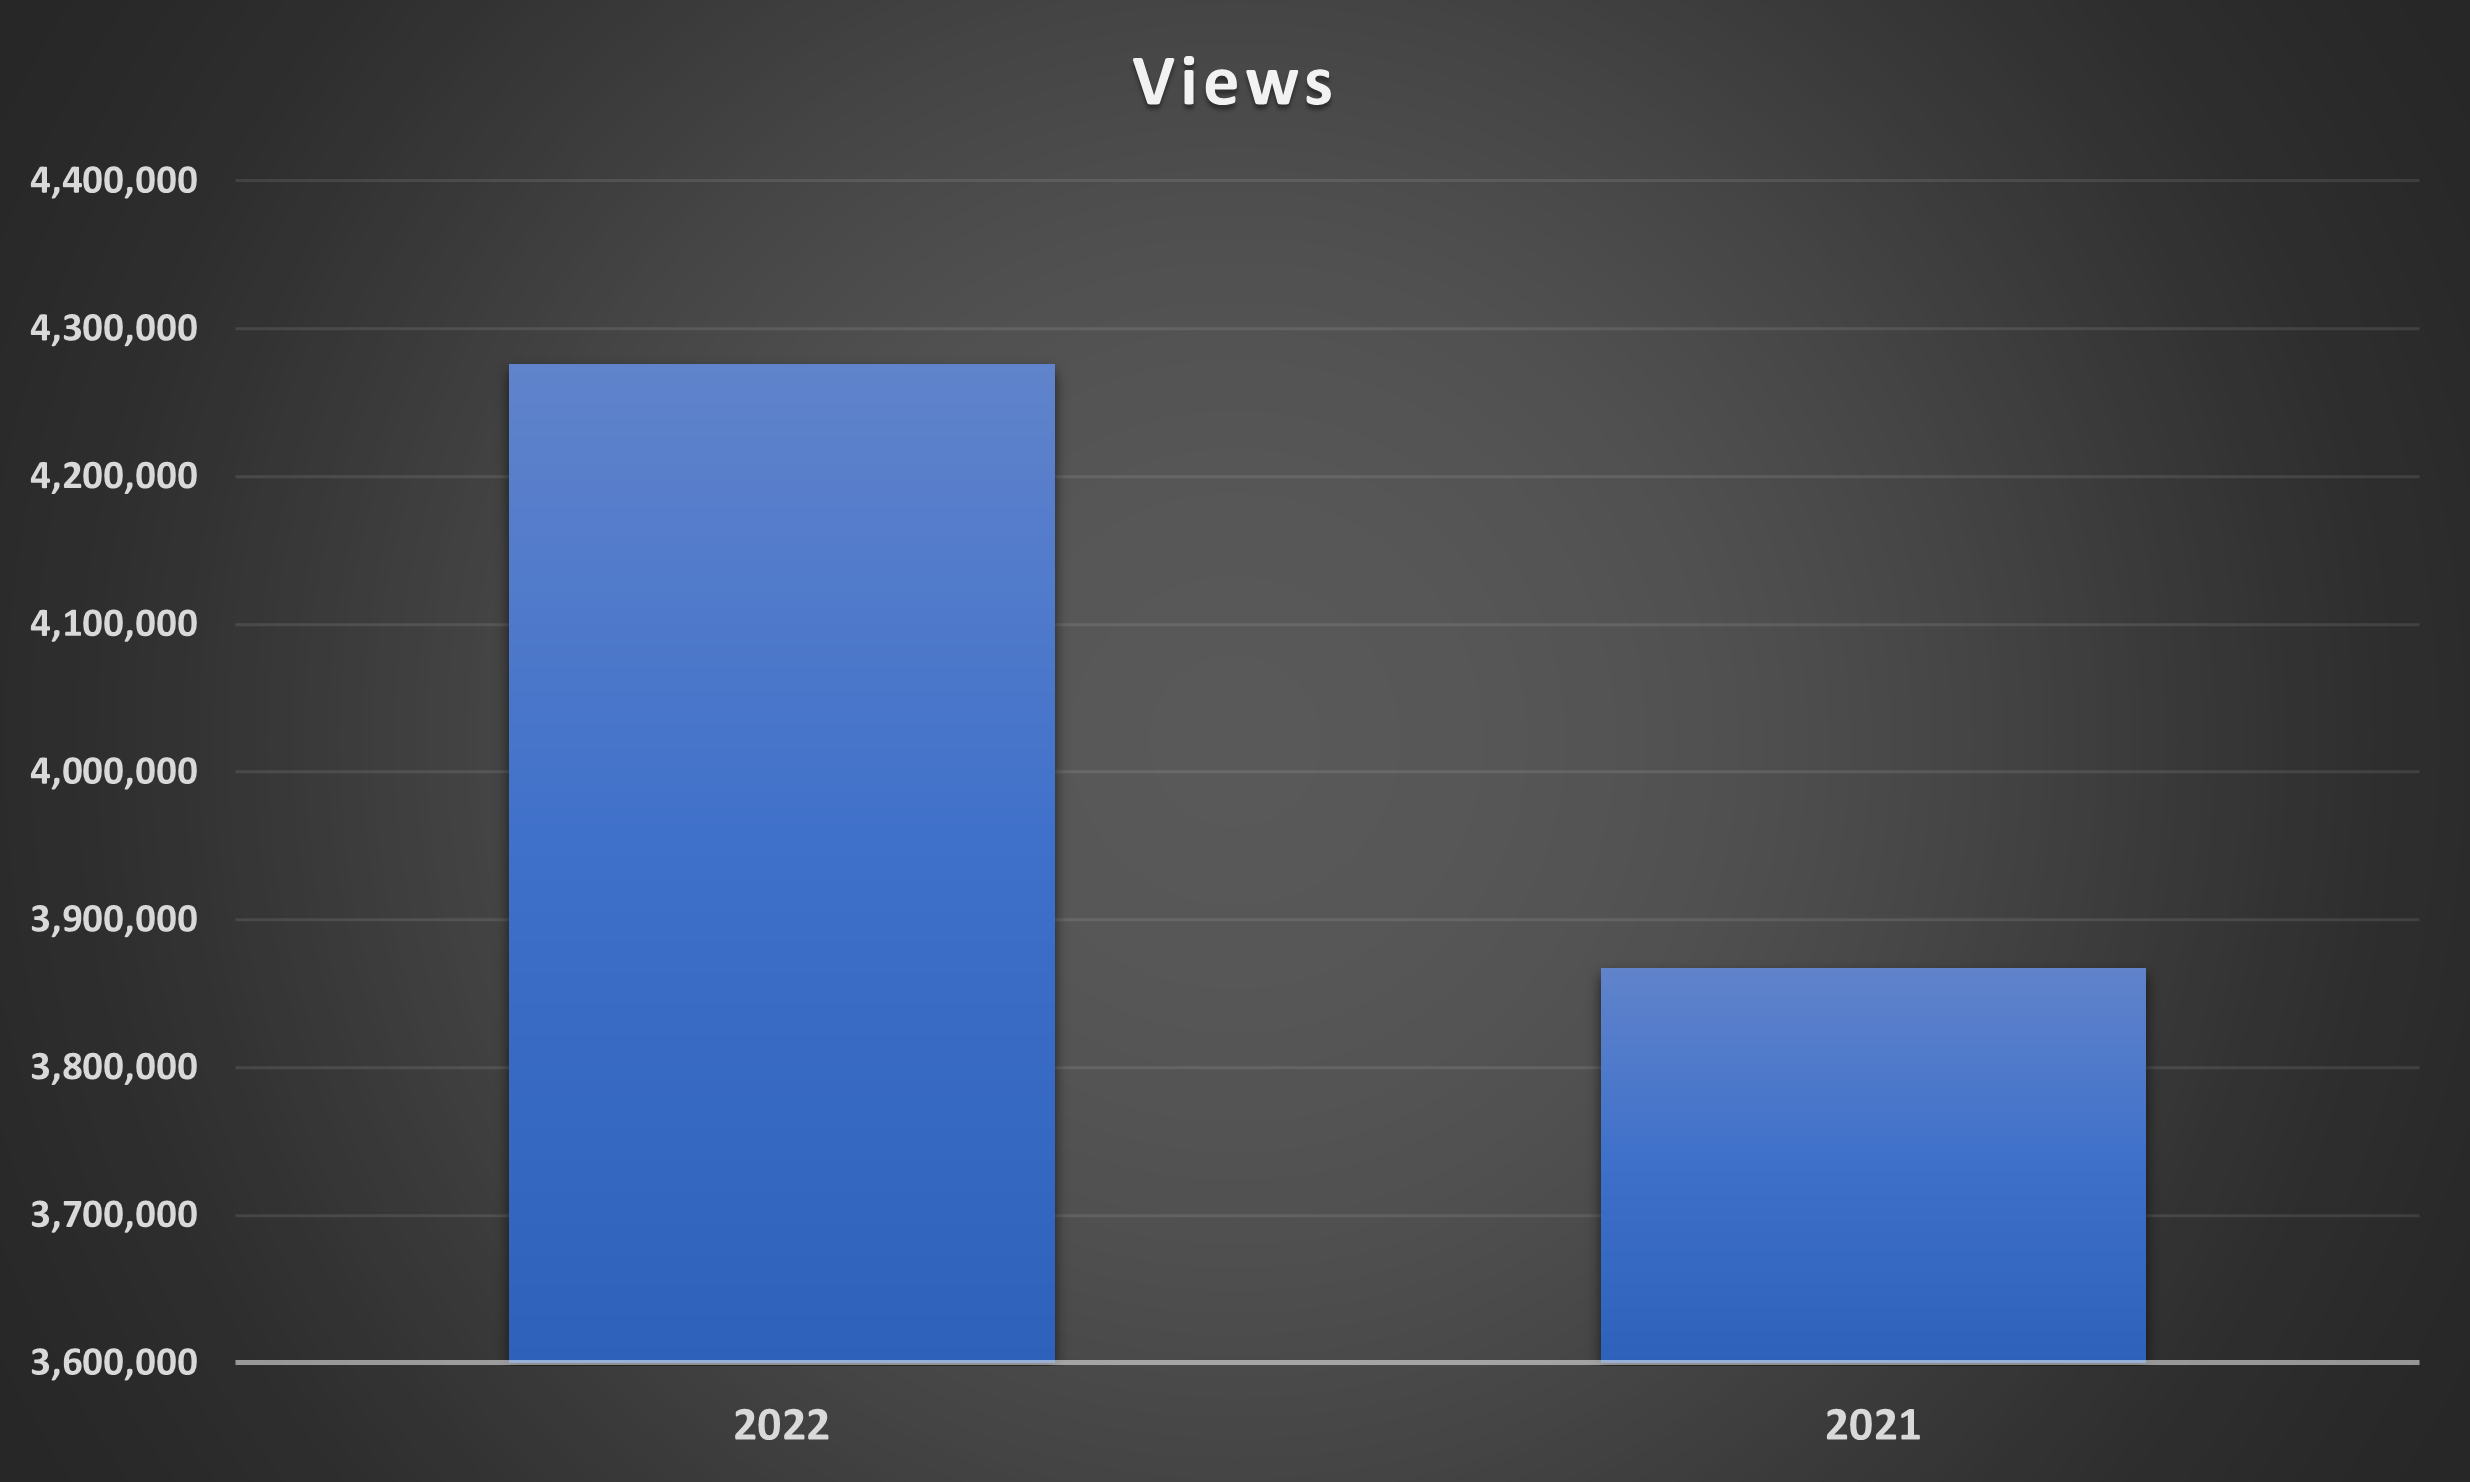 YouTube Views - 2022 vs 2021